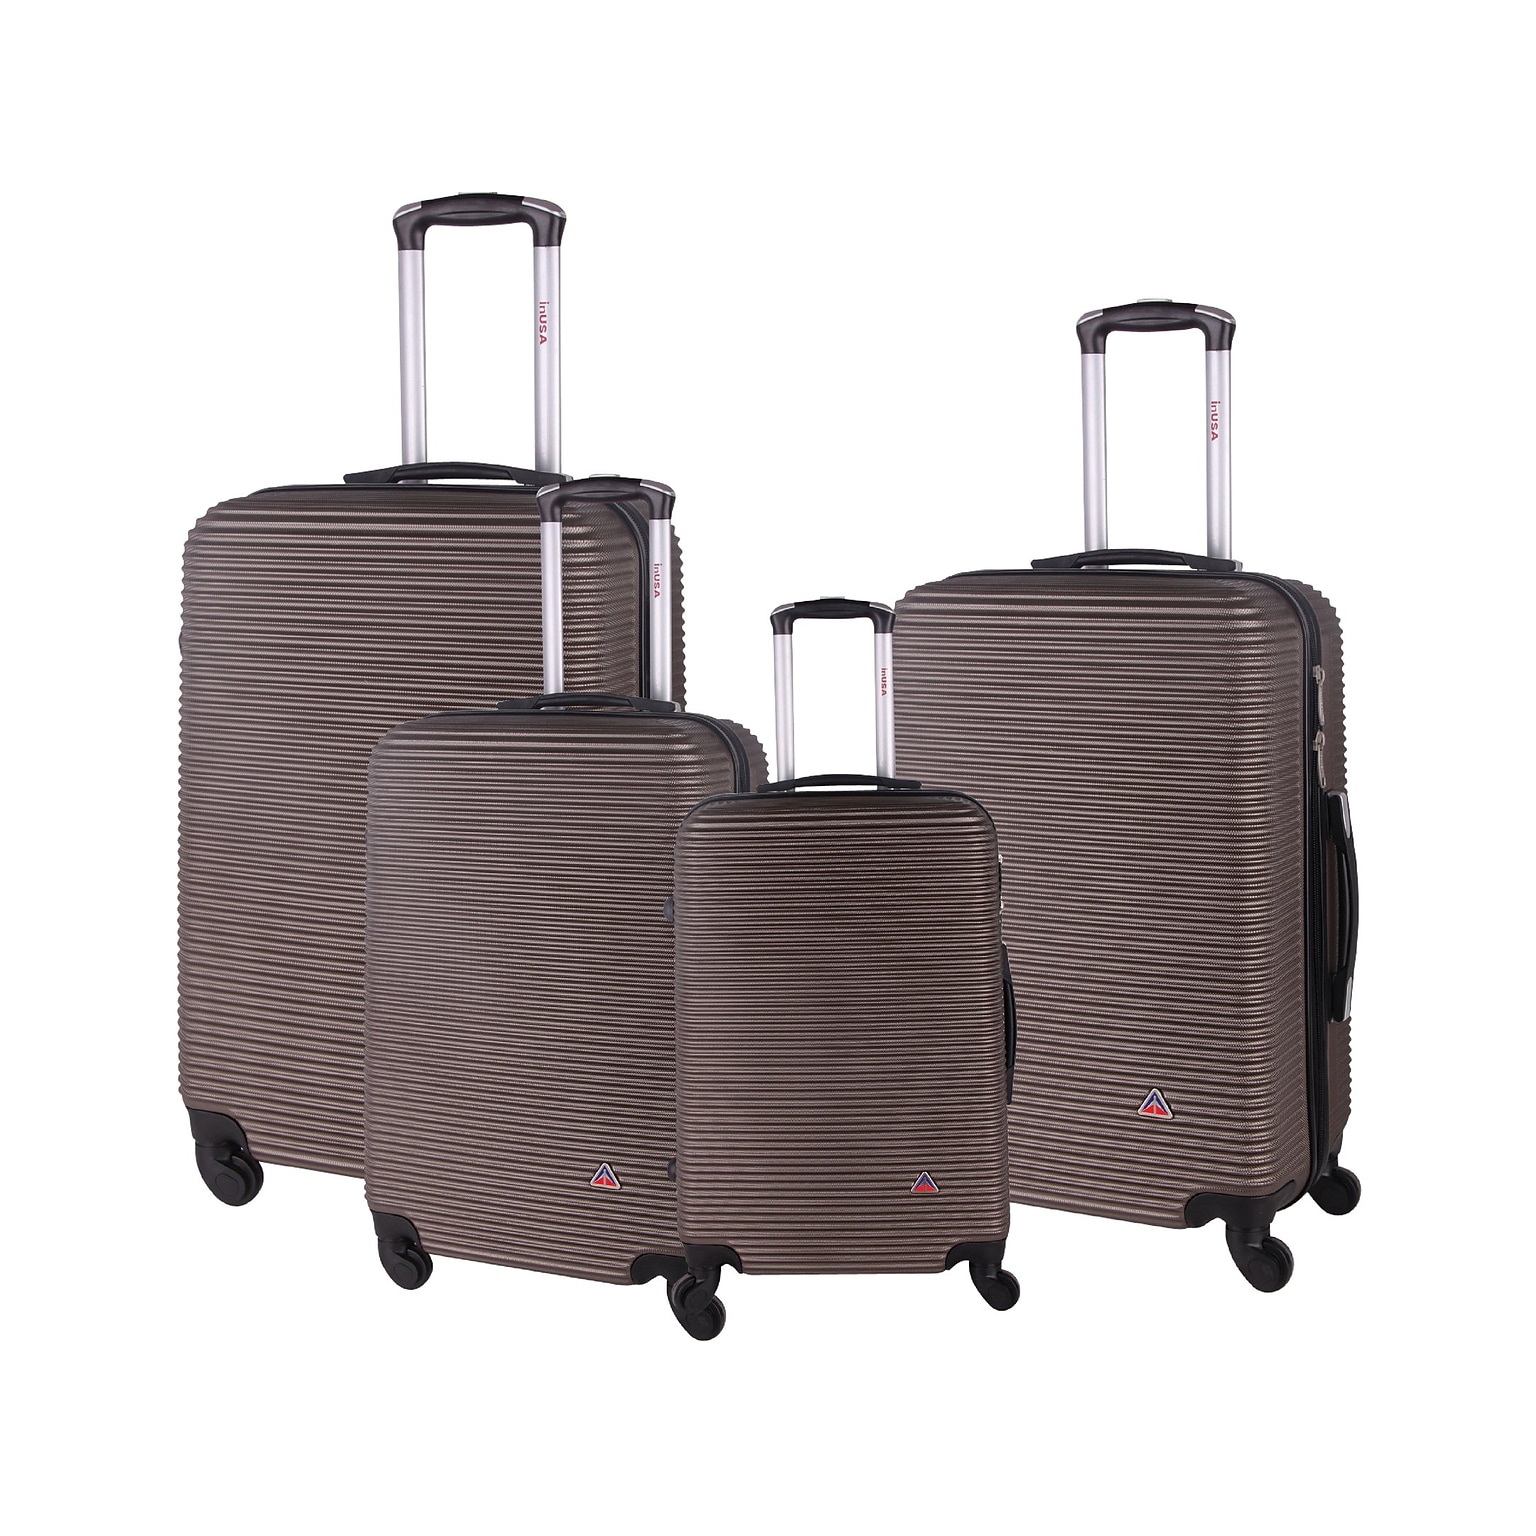 InUSA Royal 4-Piece Hardside Spinner Luggage Set, Brown (IUROYSMLXL-BRO)